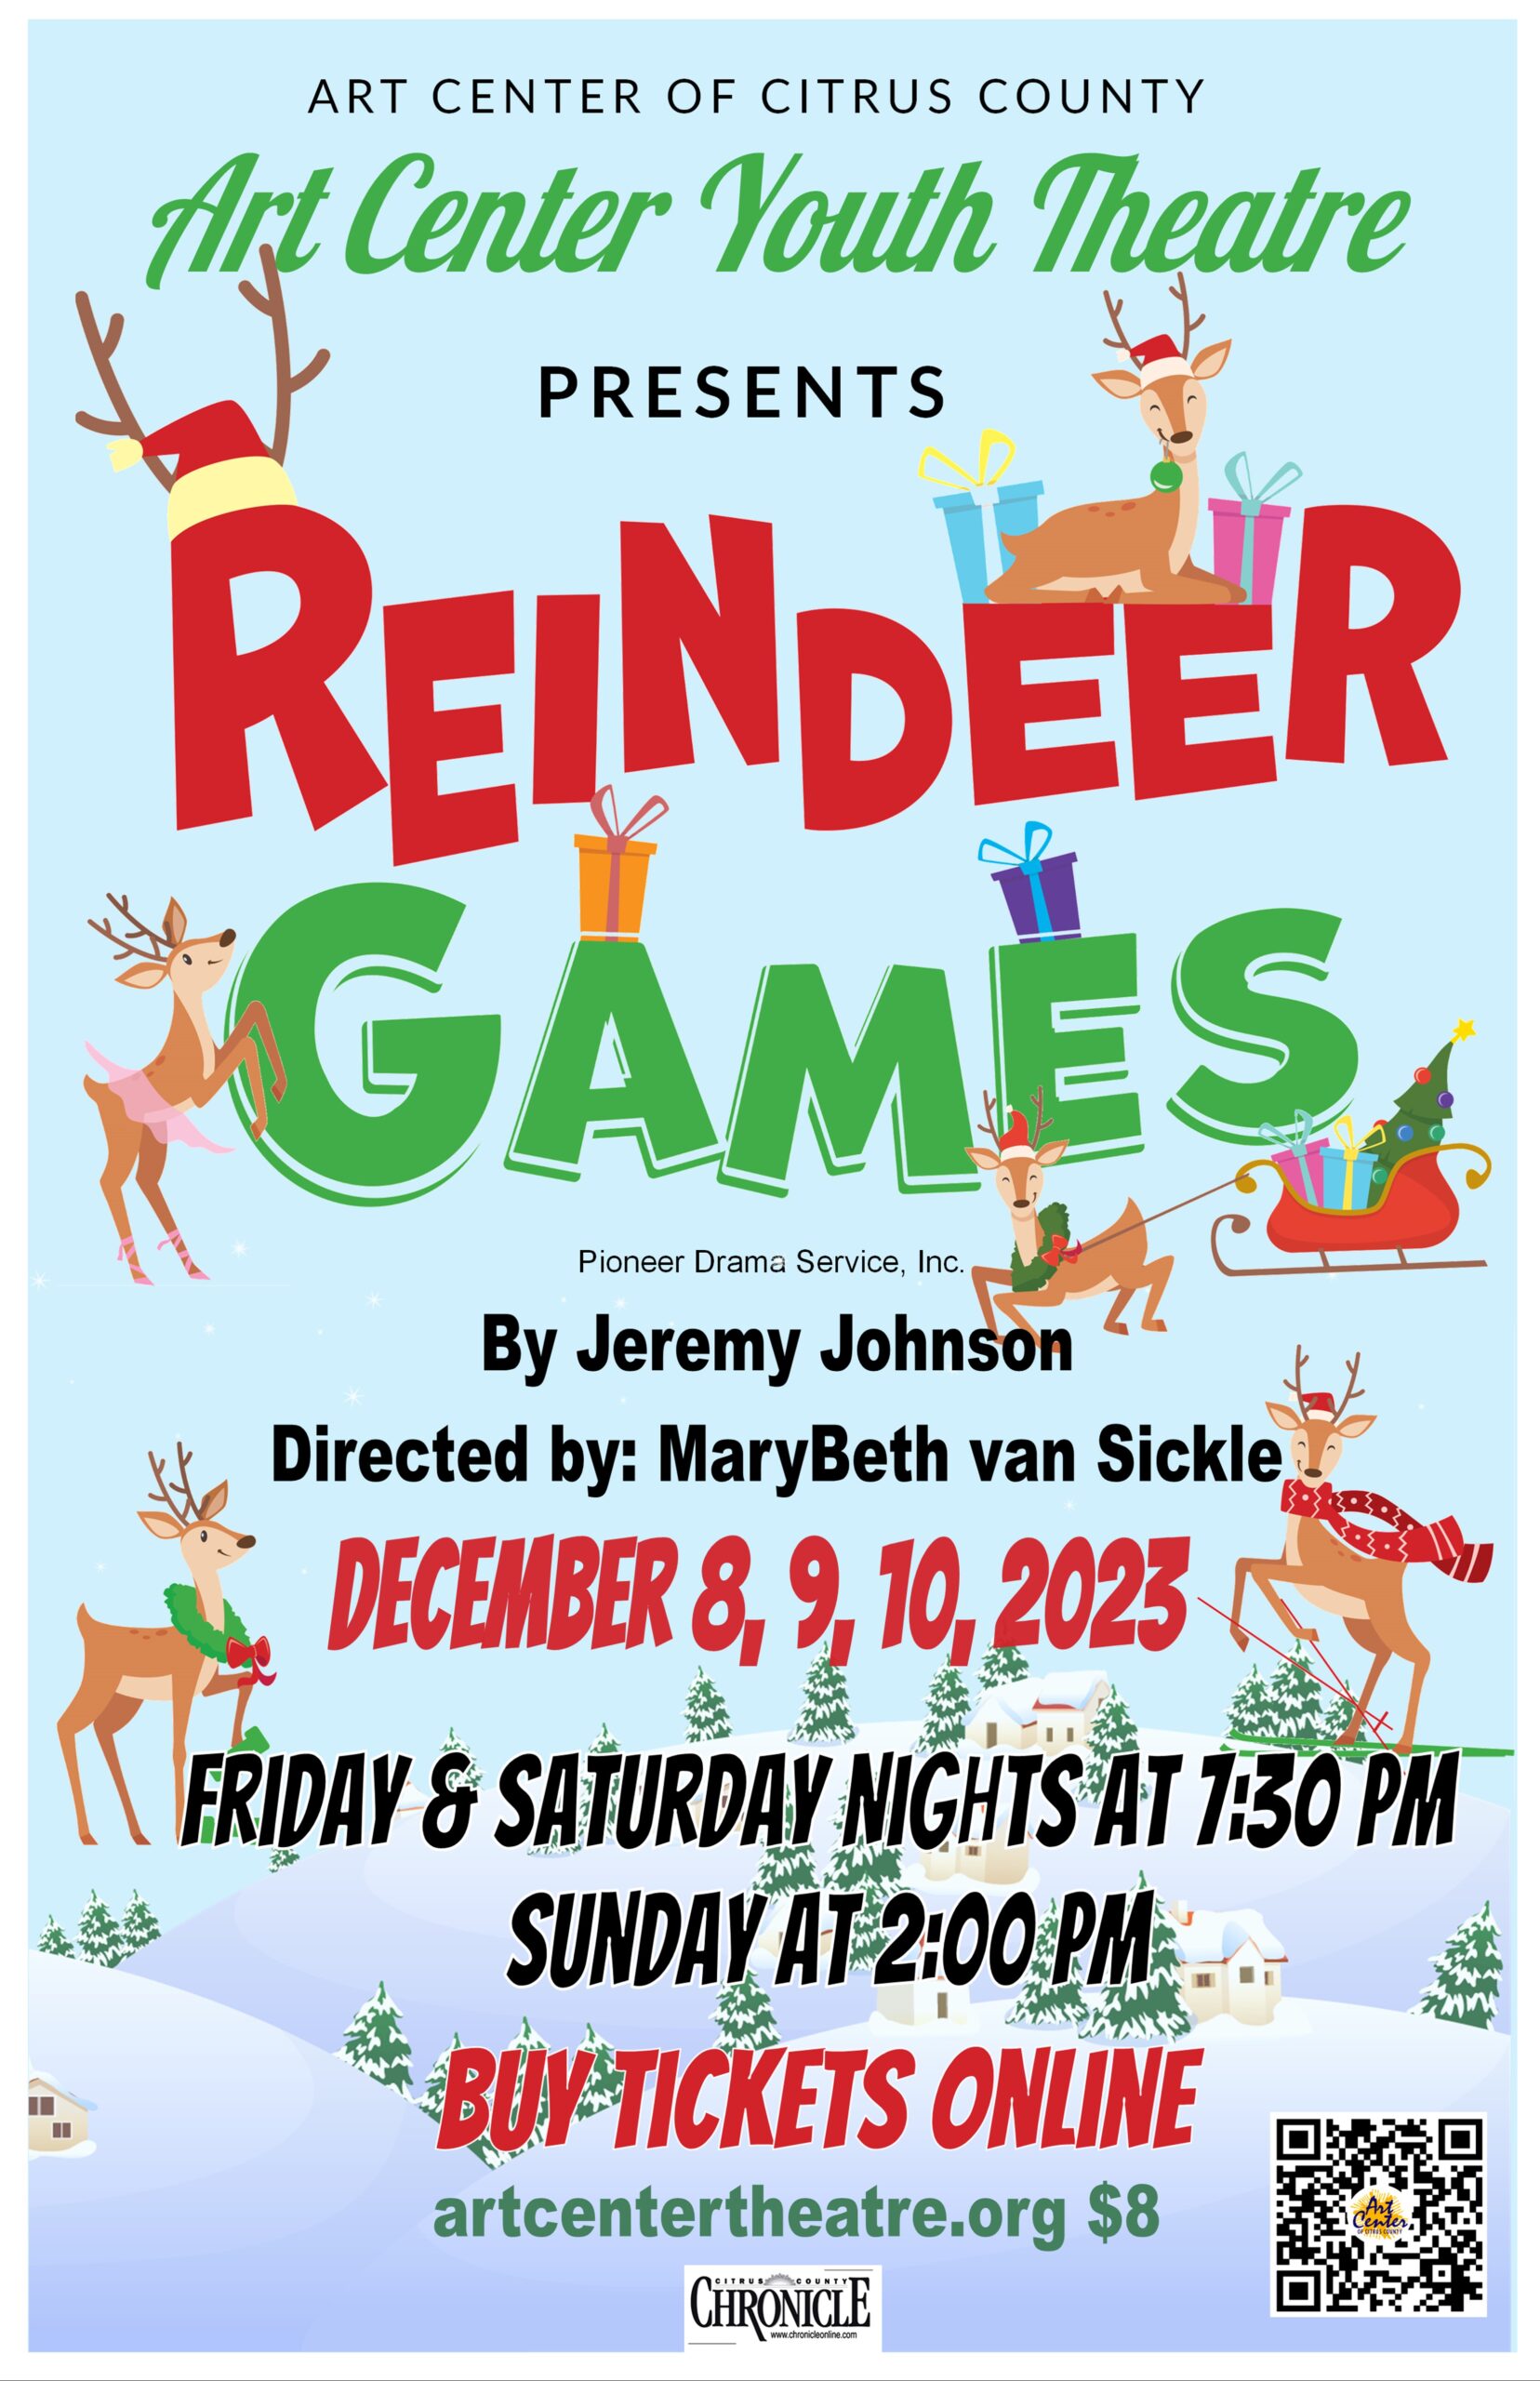 Art Center Youth Theatre Presents: Reindeer Games Dec. 8, 9, 10